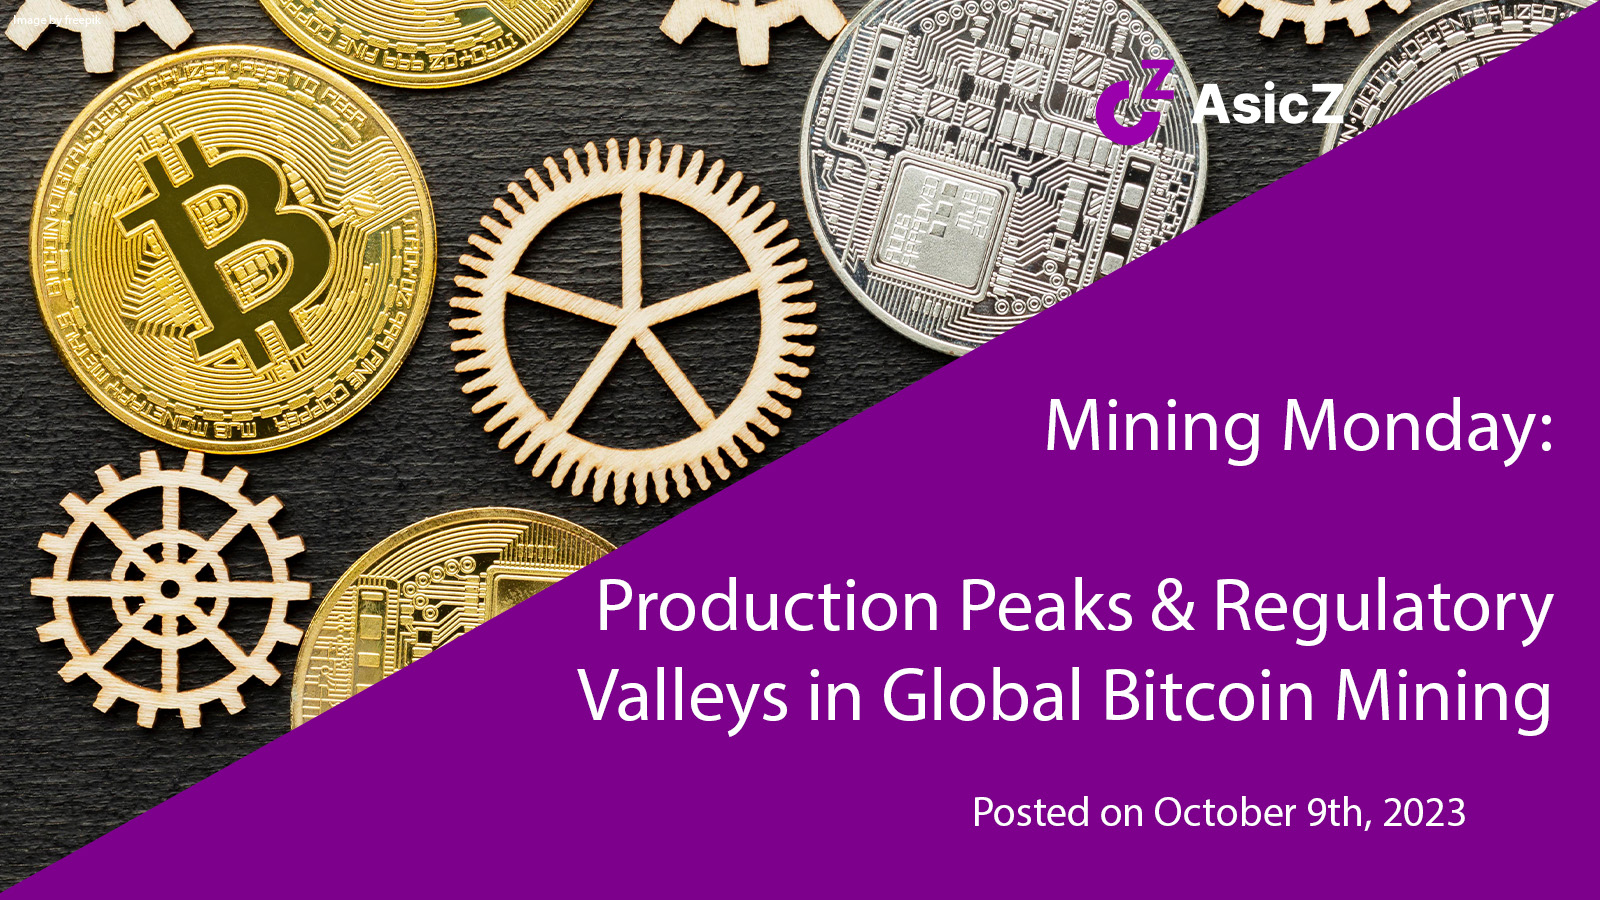 Mining Monday: Production Peaks & Regulatory Valleys in Global Bitcoin Mining